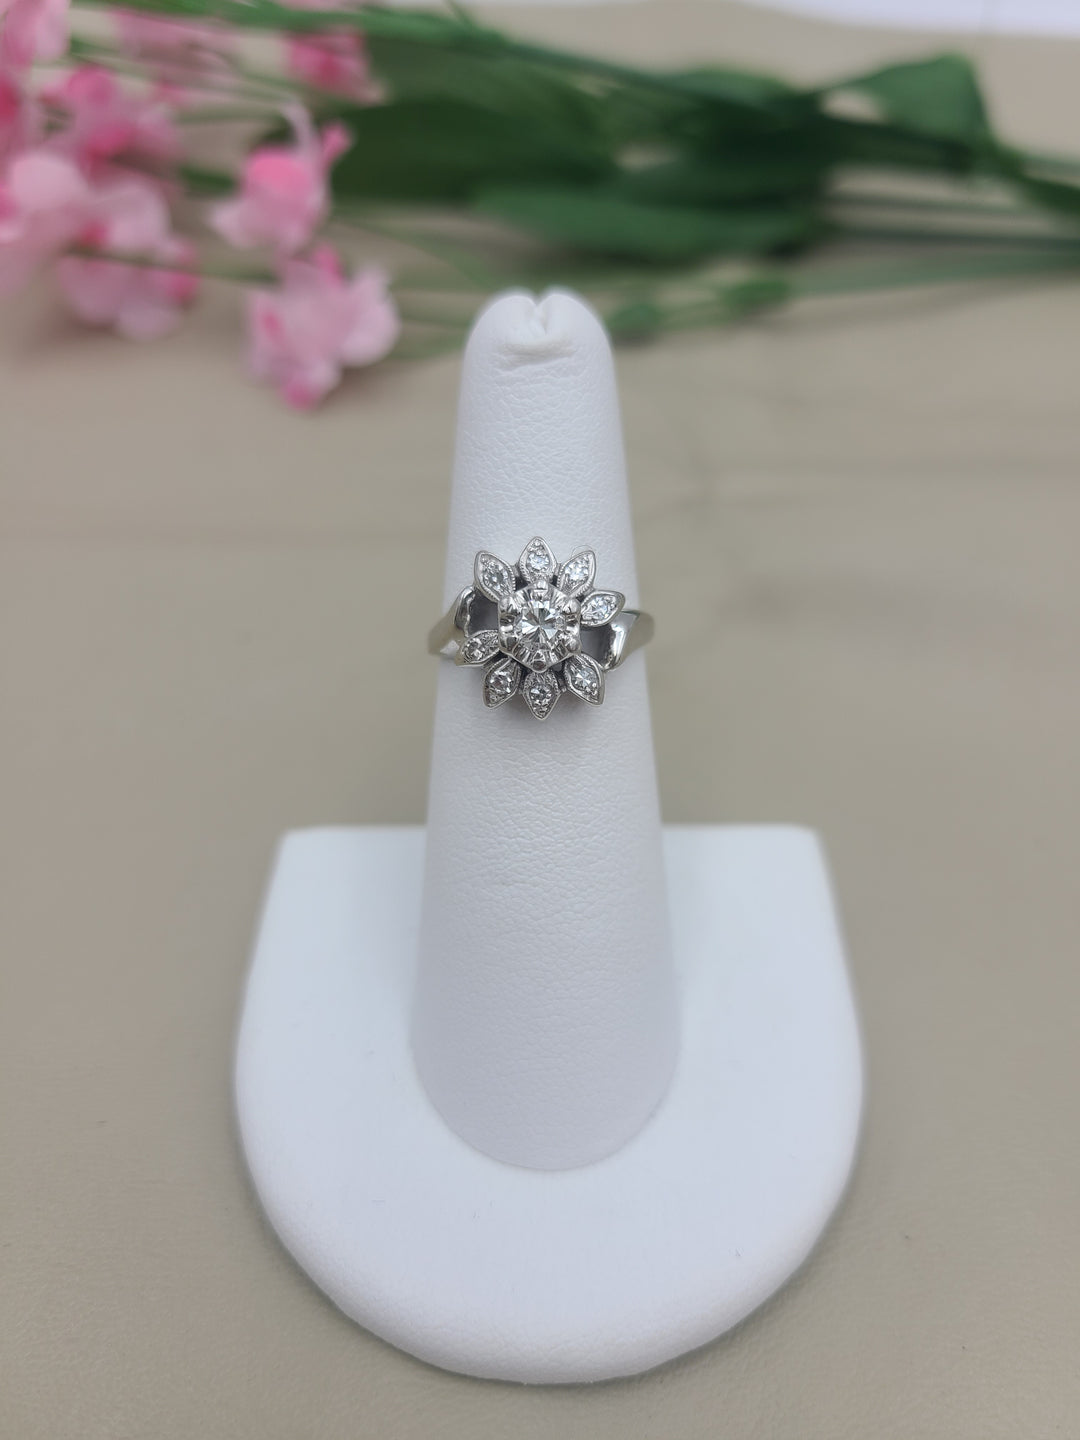 k838 Vintage Ladies 14kt White Gold Flower Style Diamond Ring